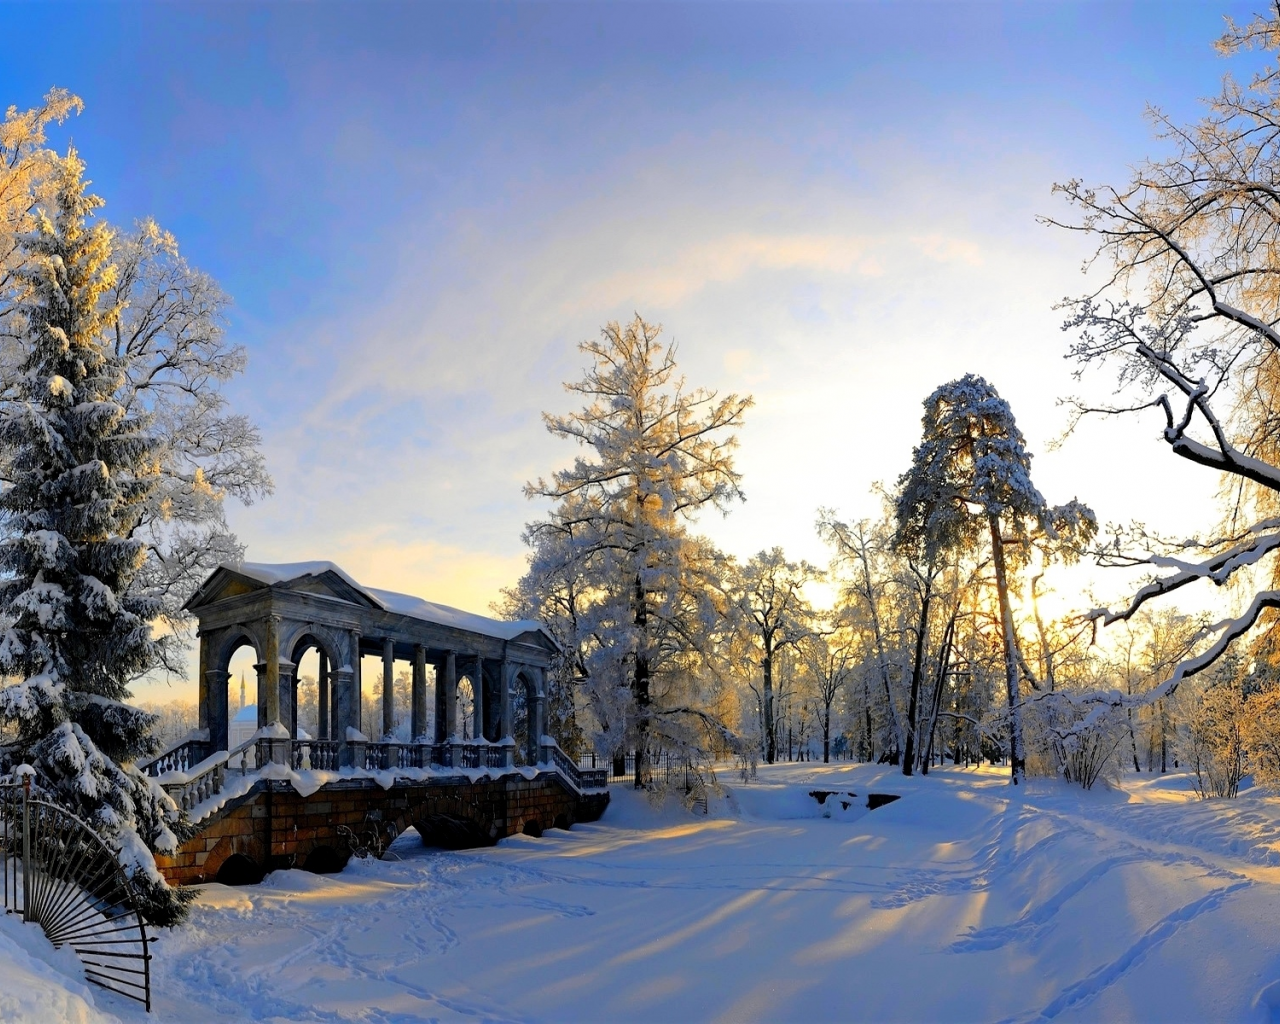 александровский парк в пушкине зимой